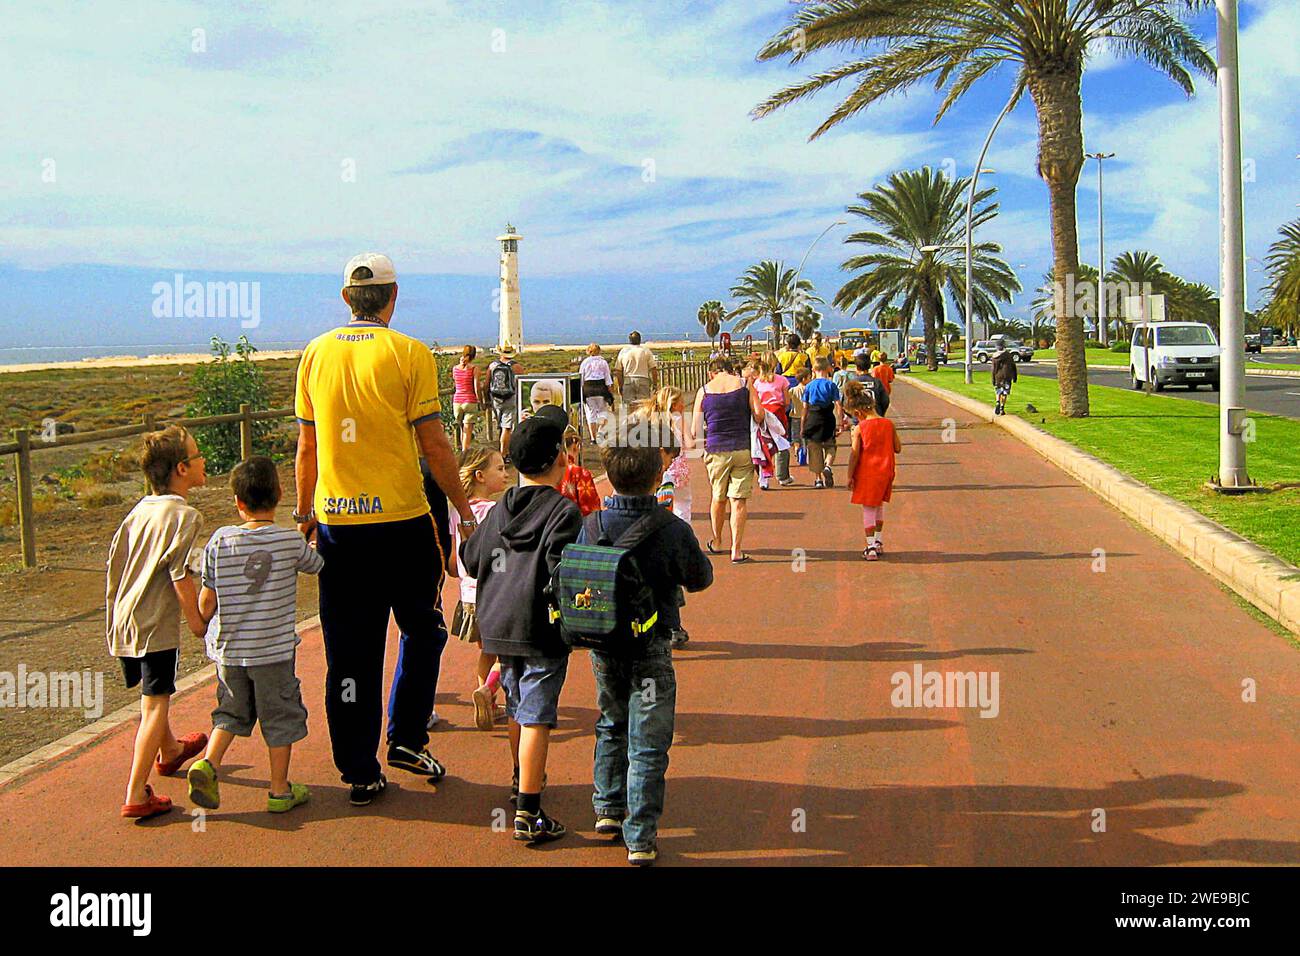 Spanische Kinder bei Schulausflug in Jandia im Sueden von Fuerteventura AM 09.01.2009. *** Bambini spagnoli in una gita scolastica a Jandia nel sud di Fuerteventura il 09 01 2009 Foto Stock